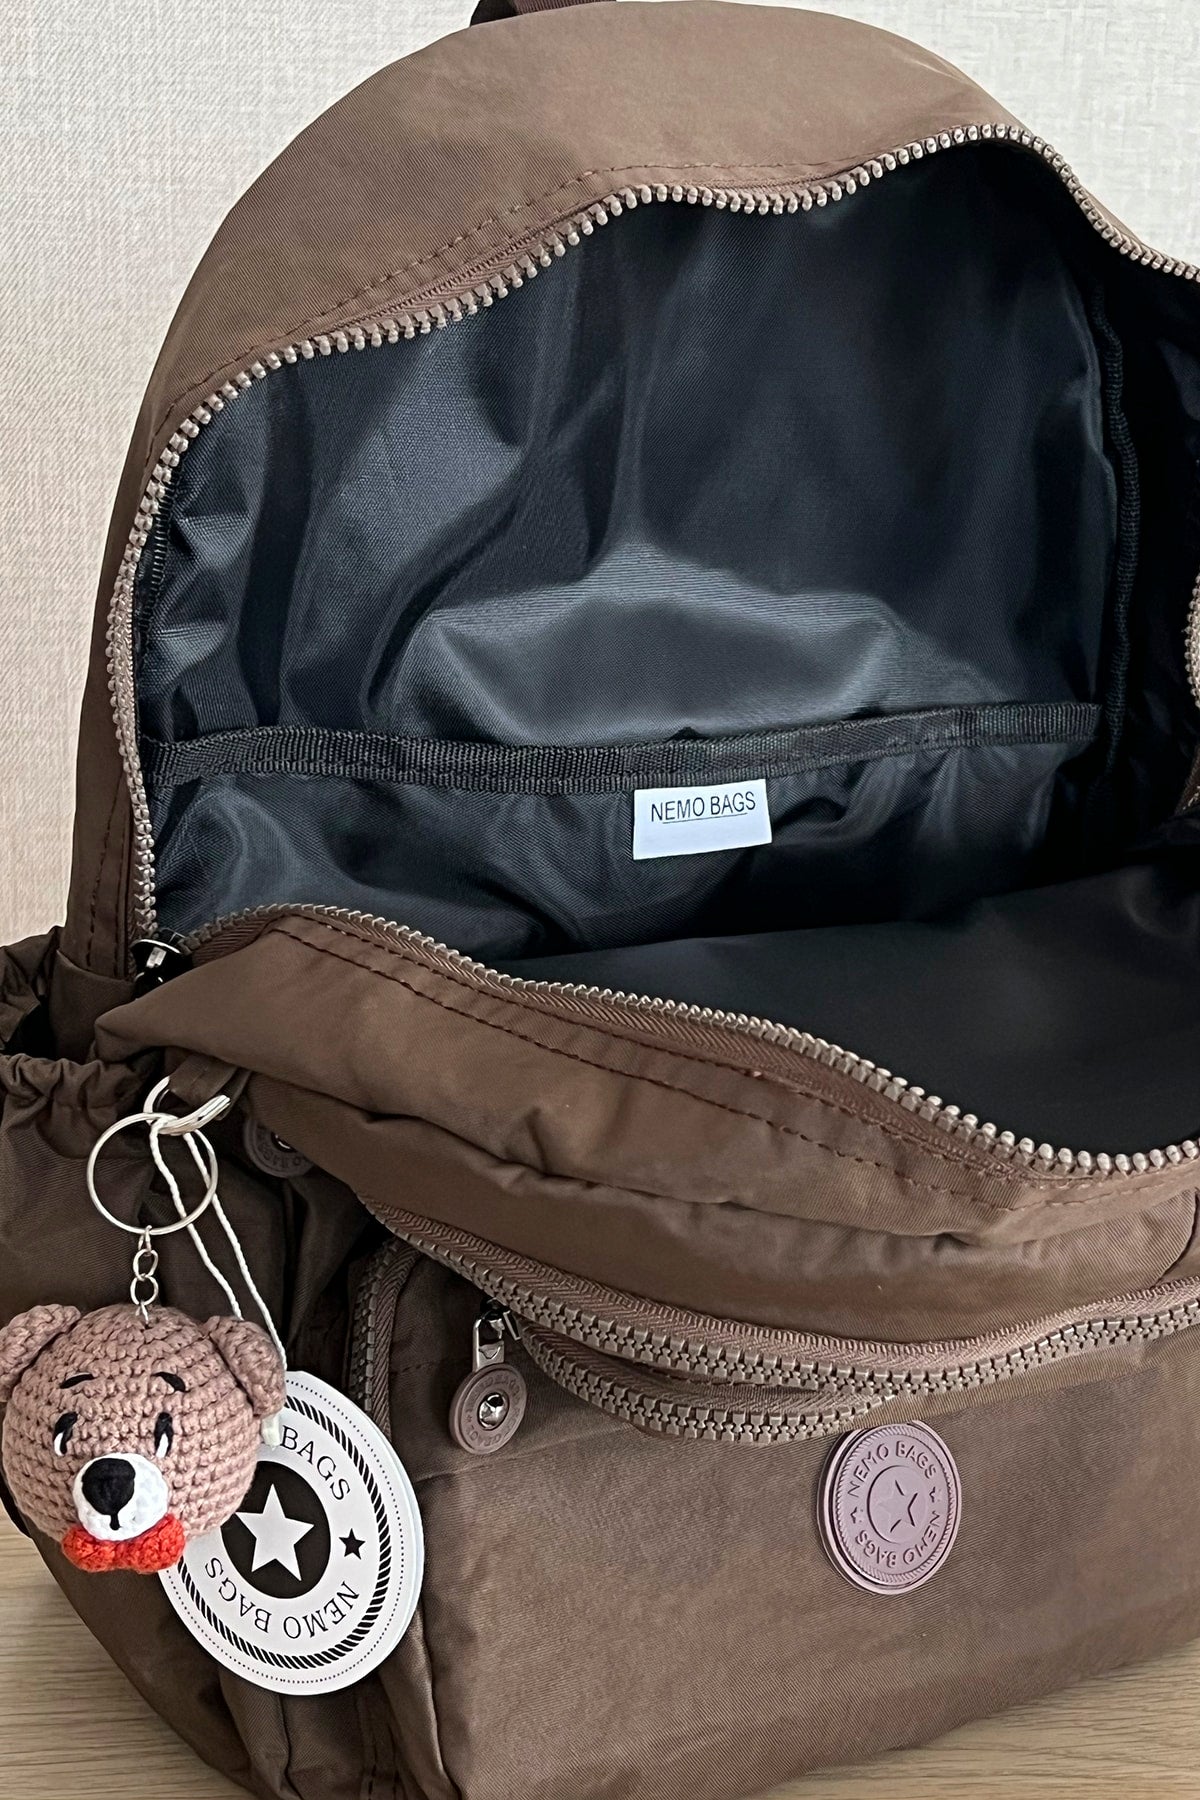 Dark Mink Backpack School Bag 14 Inch Laptop Bag Nemobags Travel Bag 18 Lt 40x30x15cm